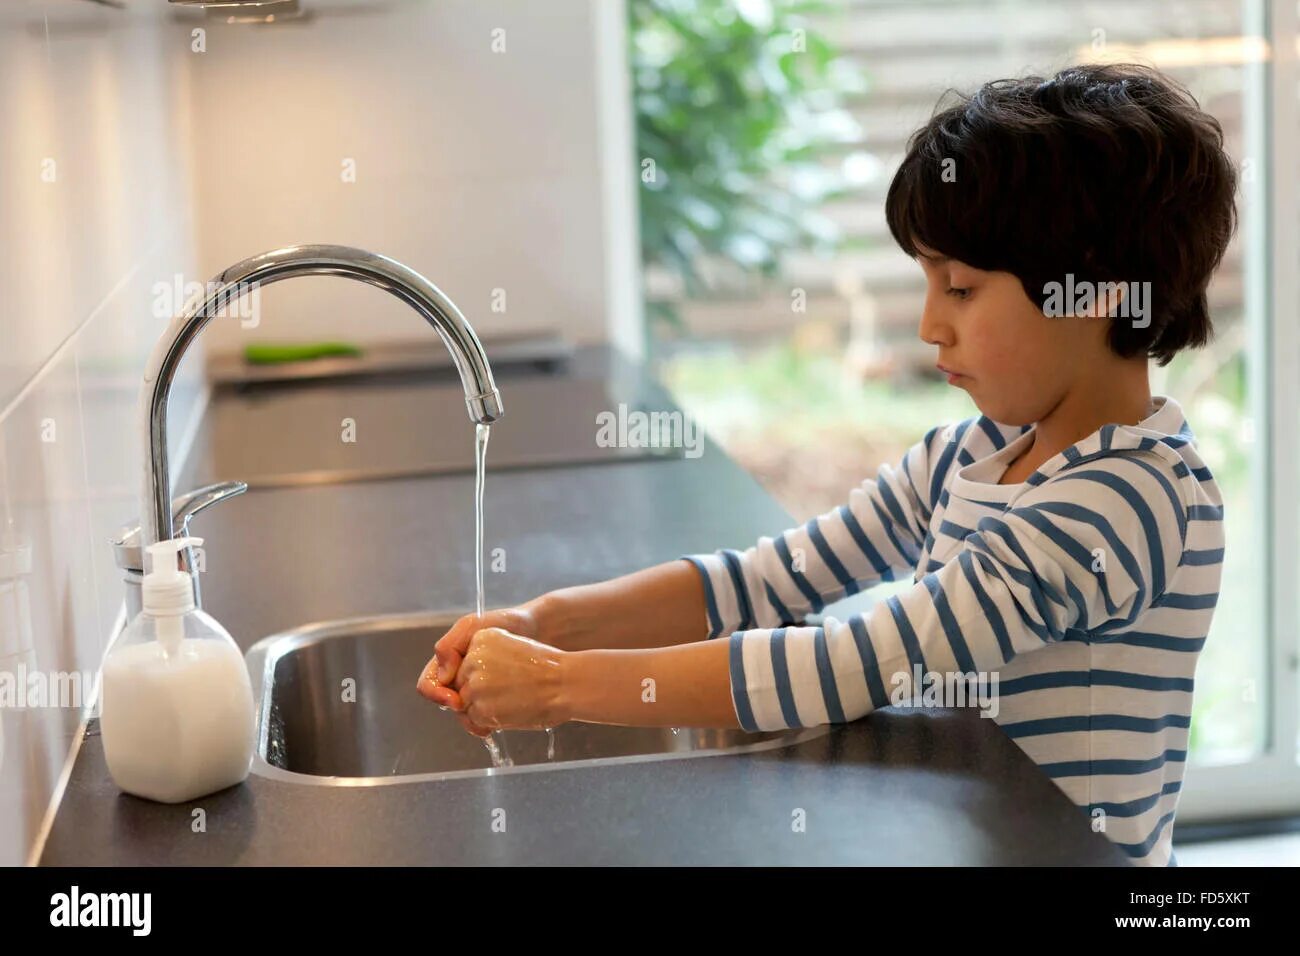 The children have washed. Мальчик моет руки картинка. Мальчик моющий руки. Мальчишка моет руки. Мытье рук для мальчиков.